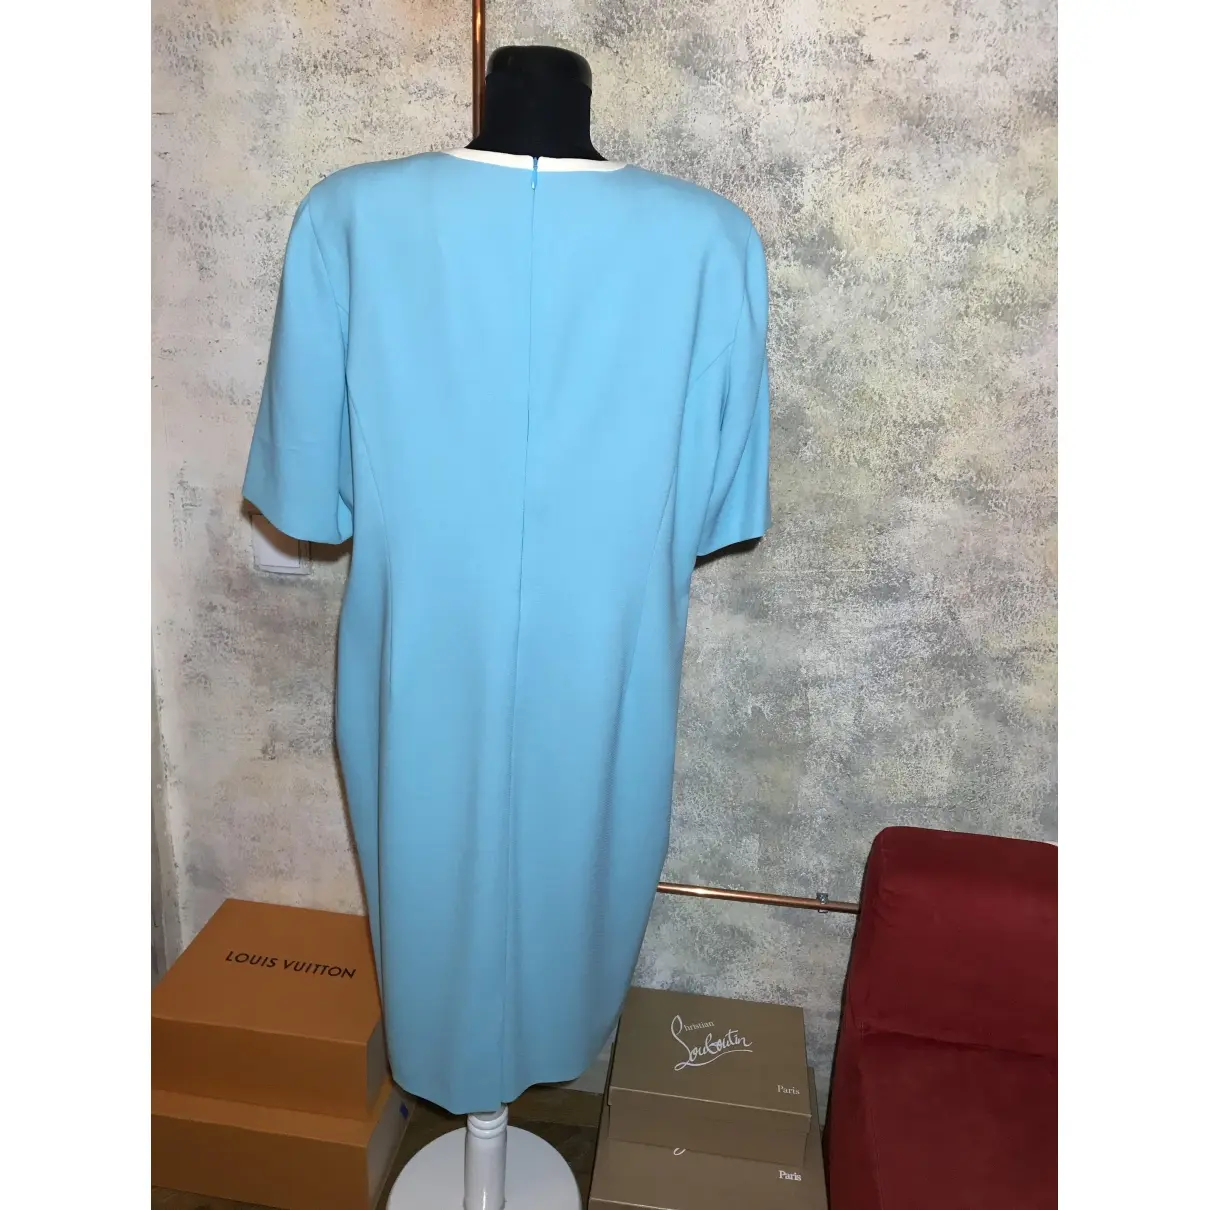 Buy Louis Feraud Wool mid-length dress online